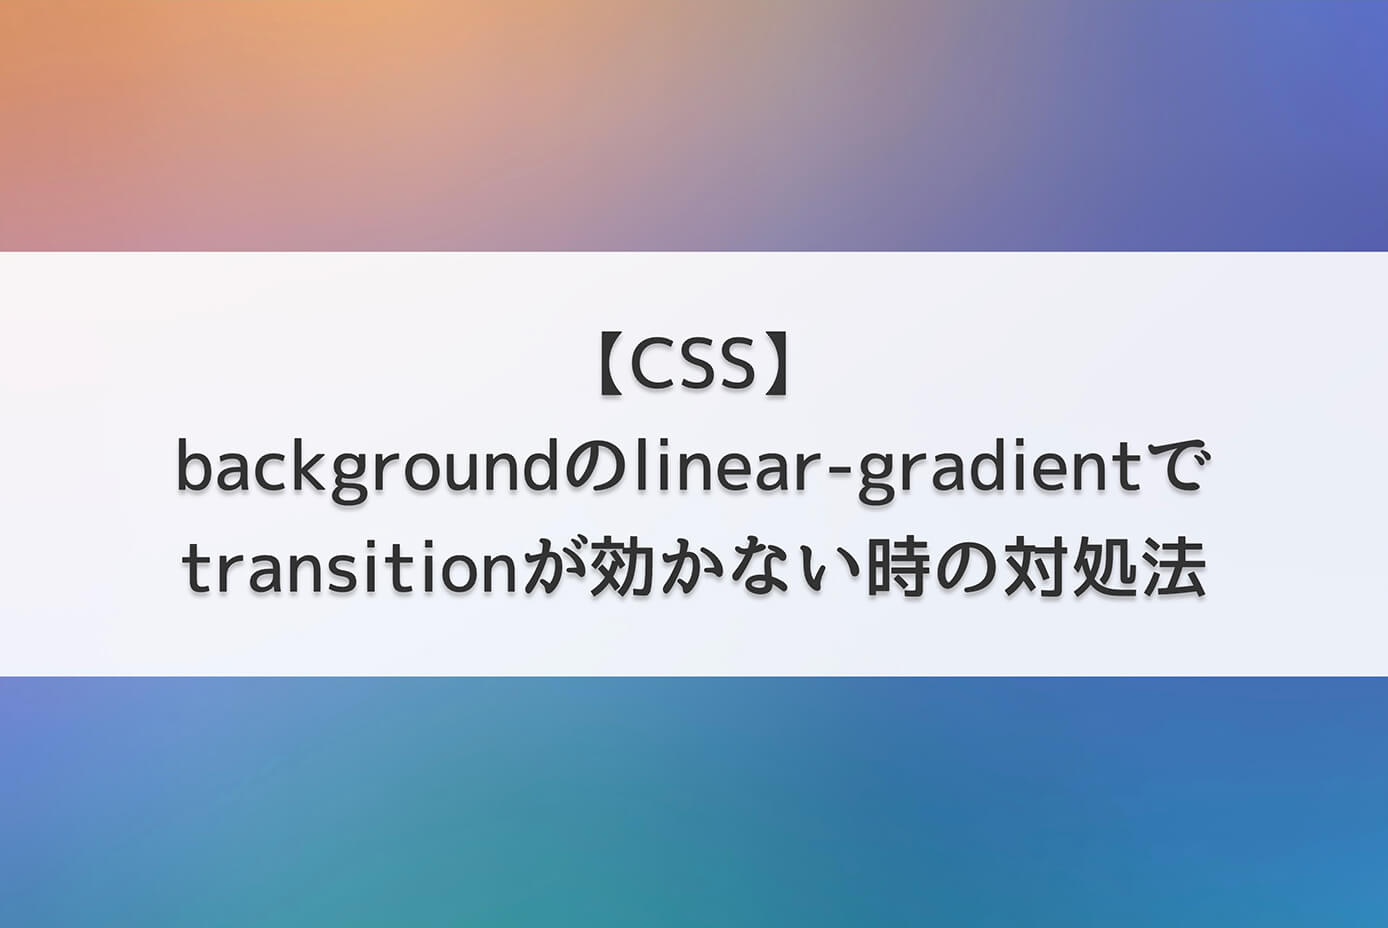 【CSS】backgroundのlinear-gradientでtransitionが効かない時の対処法